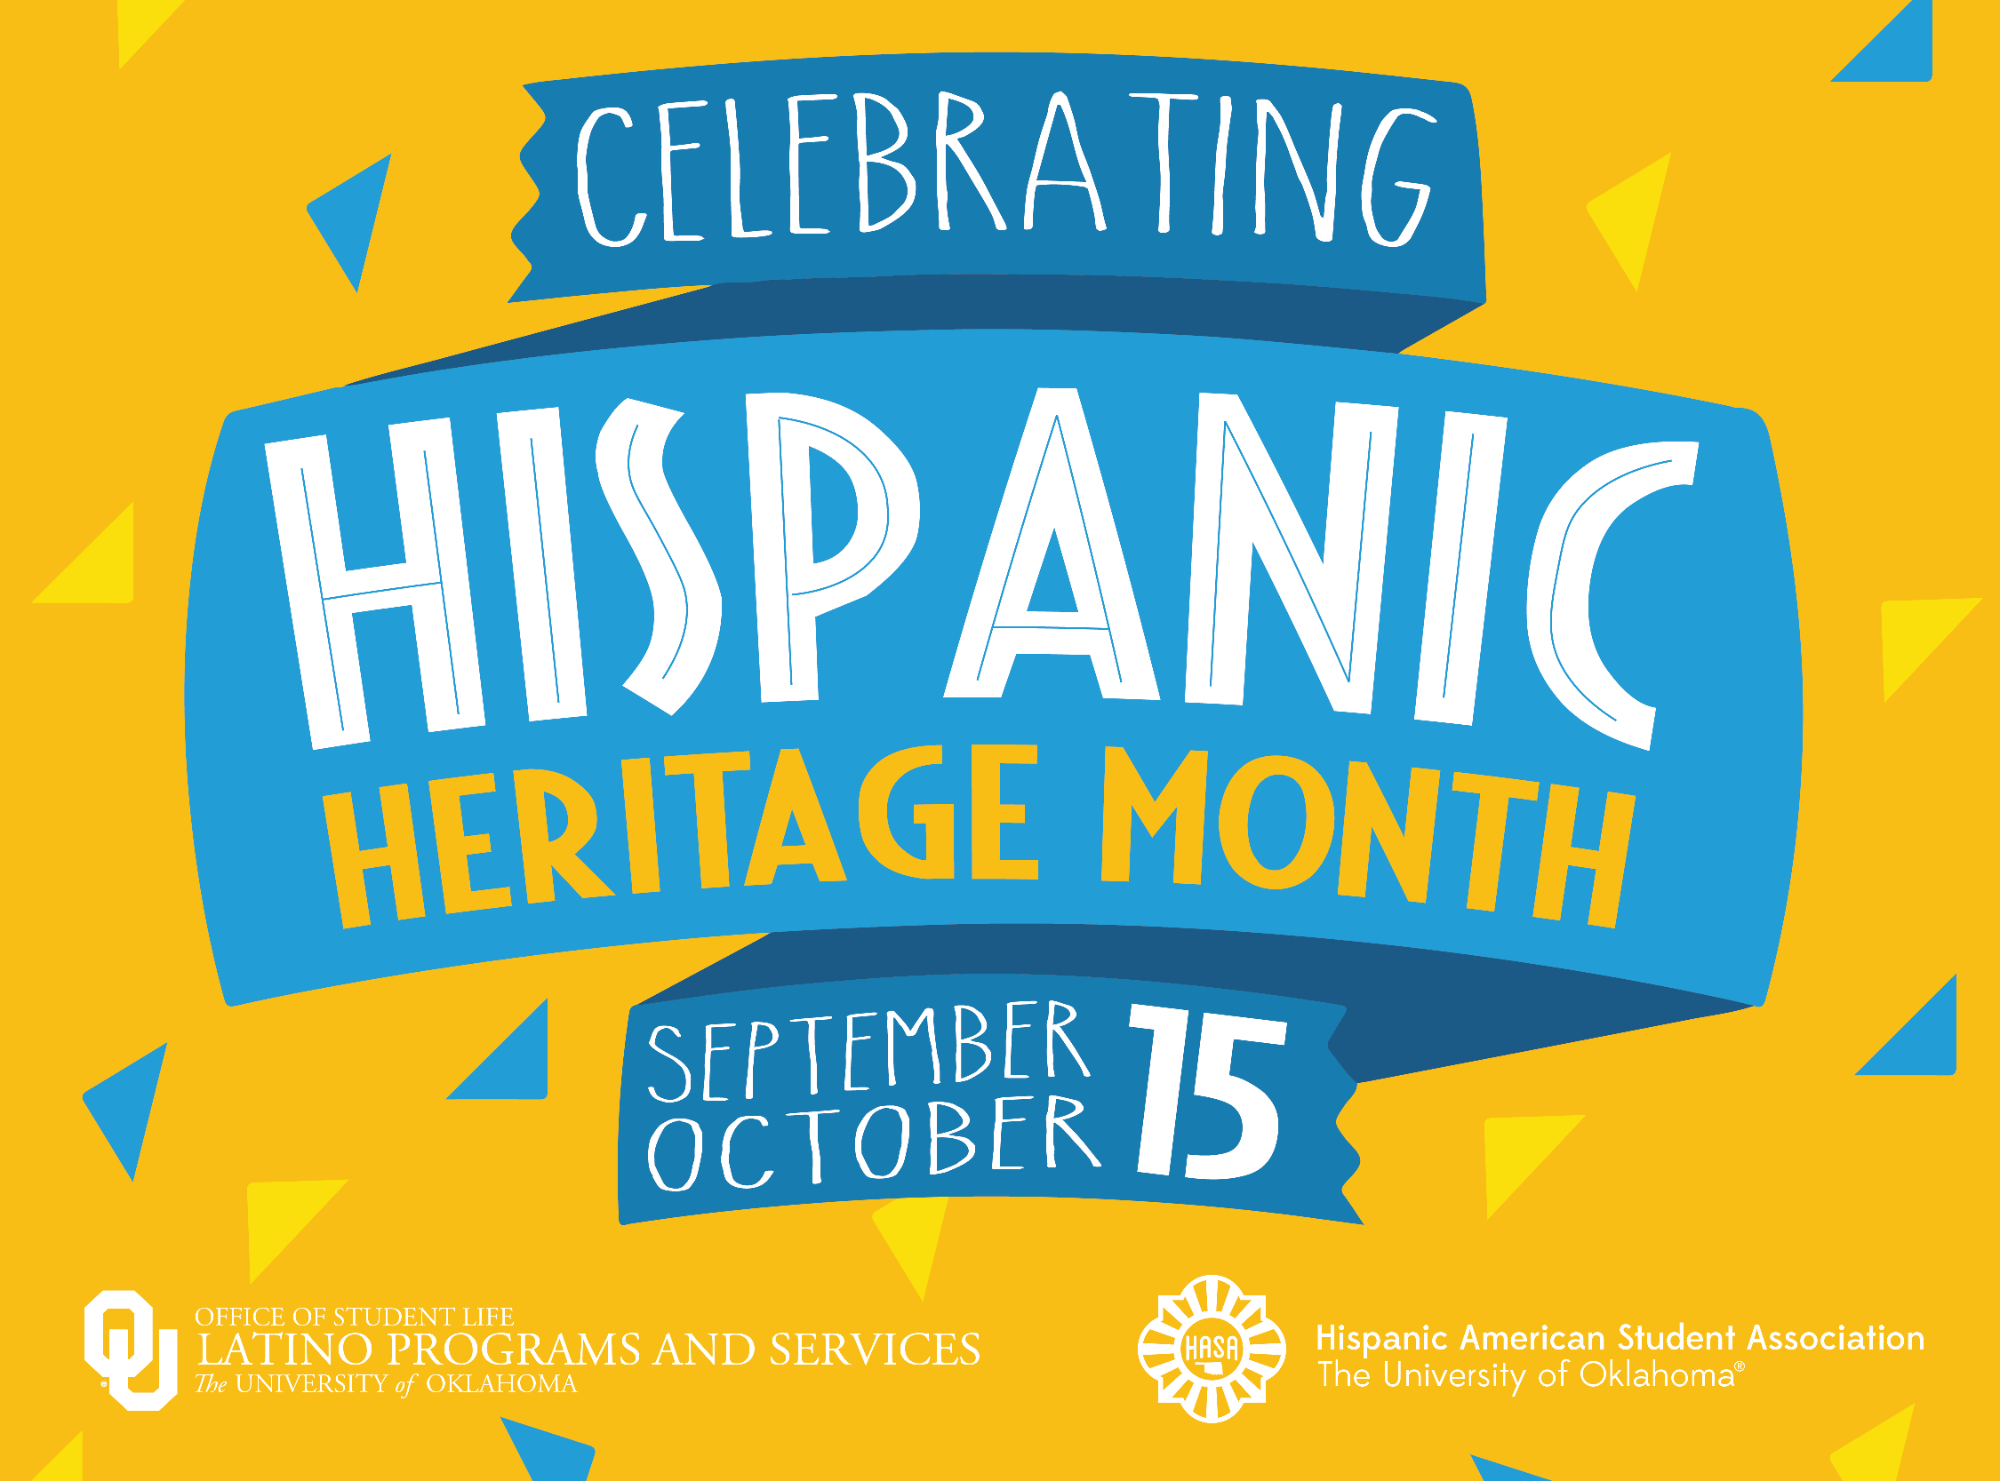 Celebrating Hispanic Heritage month September 15 through October 15.  OU Latno Programs and Services and OU HASA (hispanic american student association)